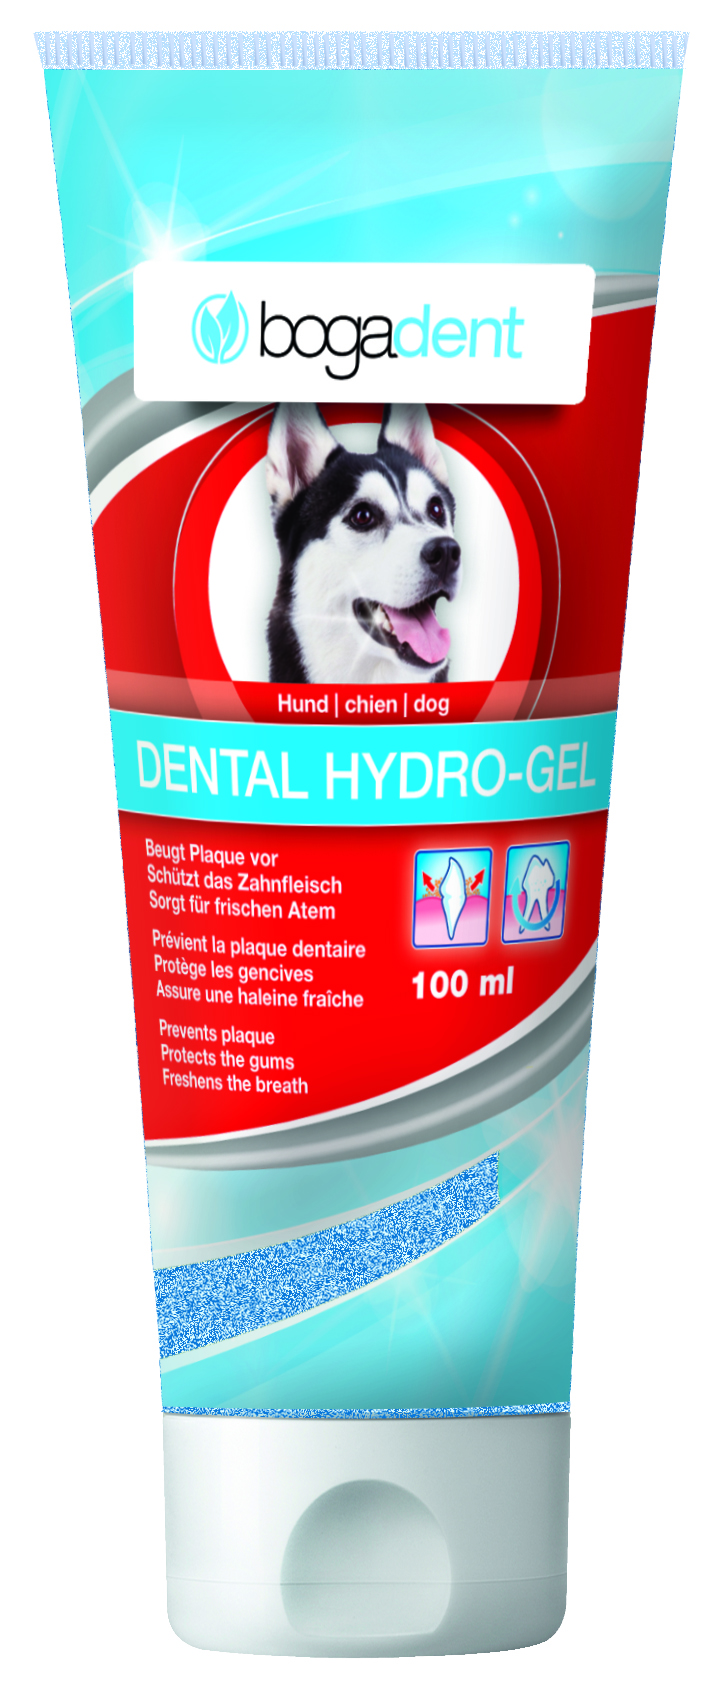 bogadent Dental Hydro-Gel für Hunde